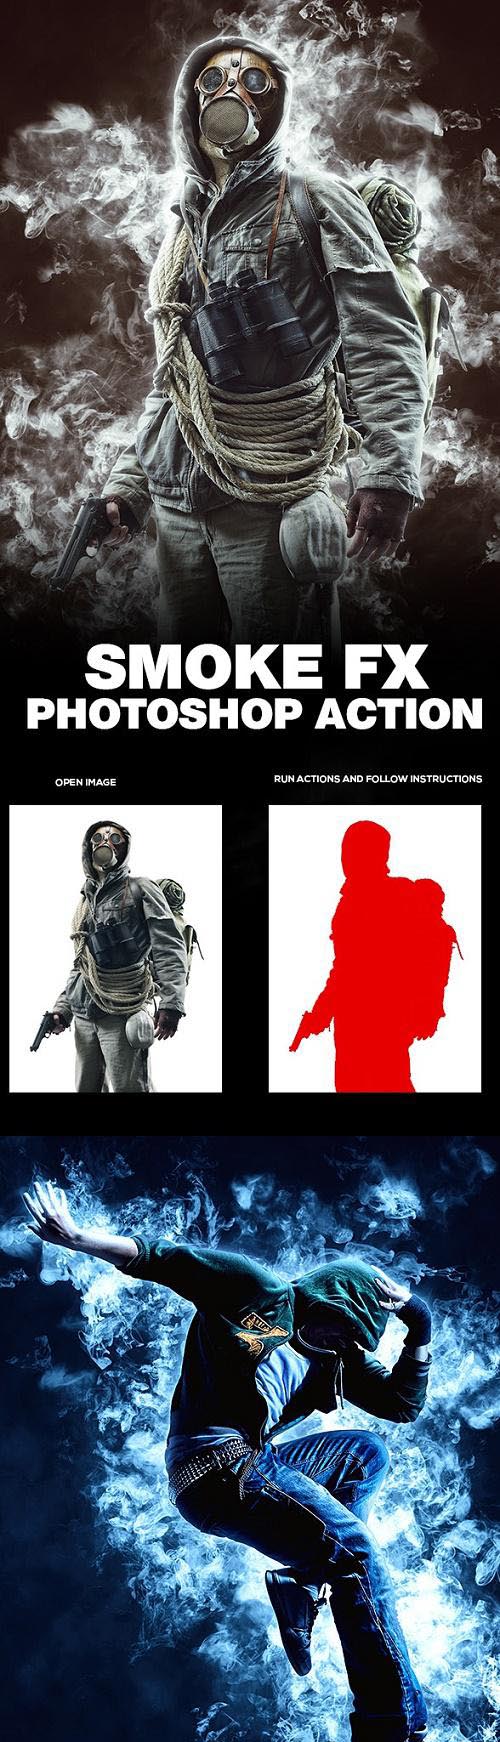 Smoke EFX Photoshop Action 23874642